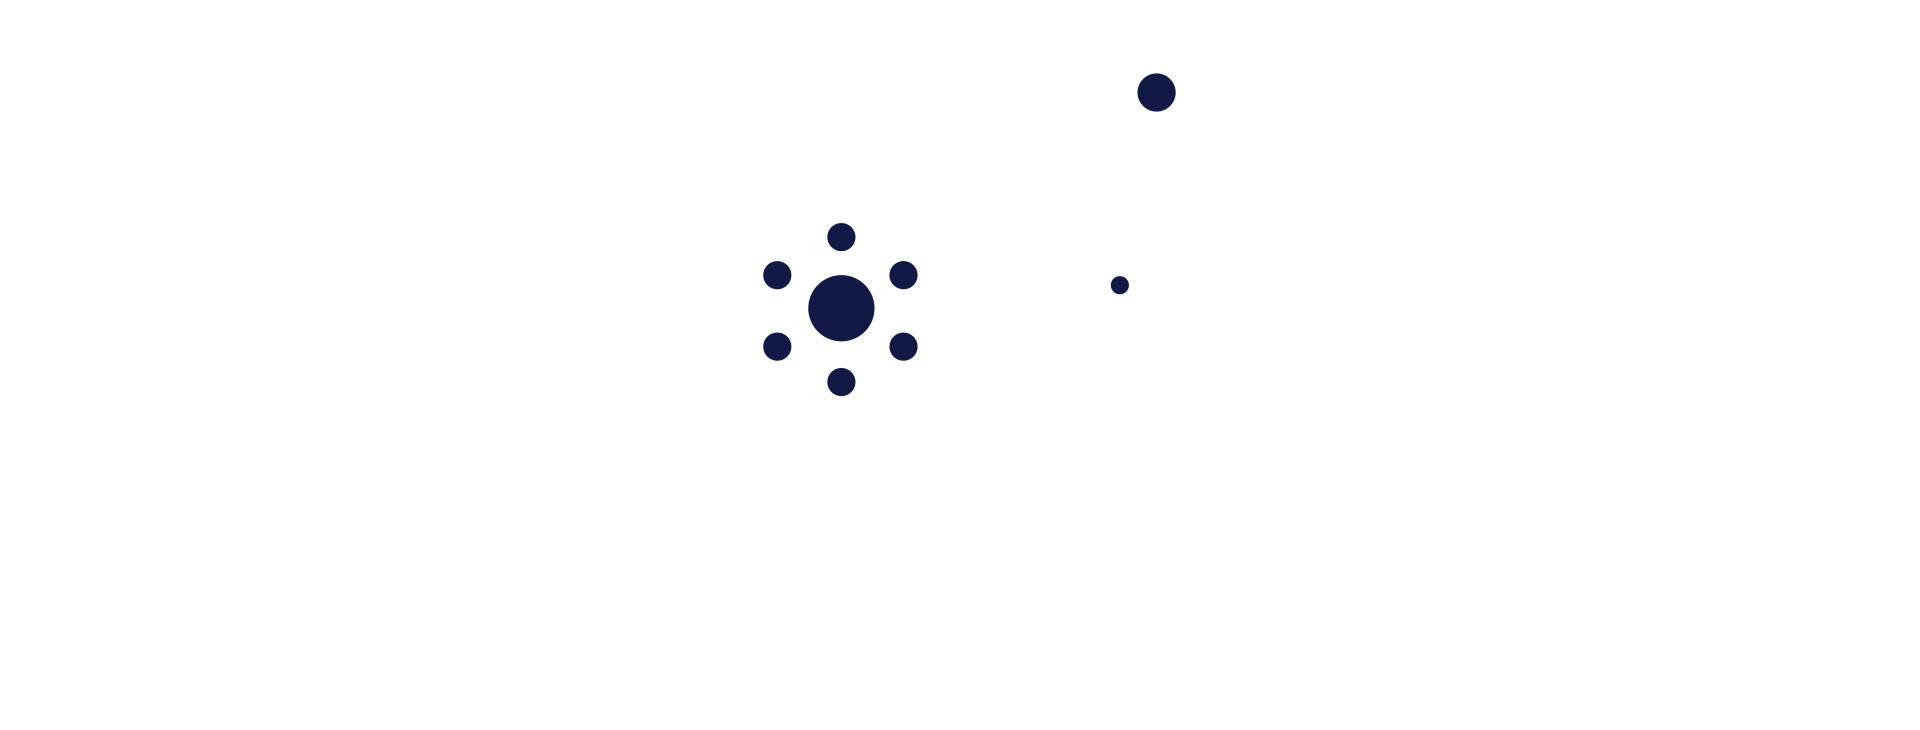 Car electrics | Rotating Electrics Ltd